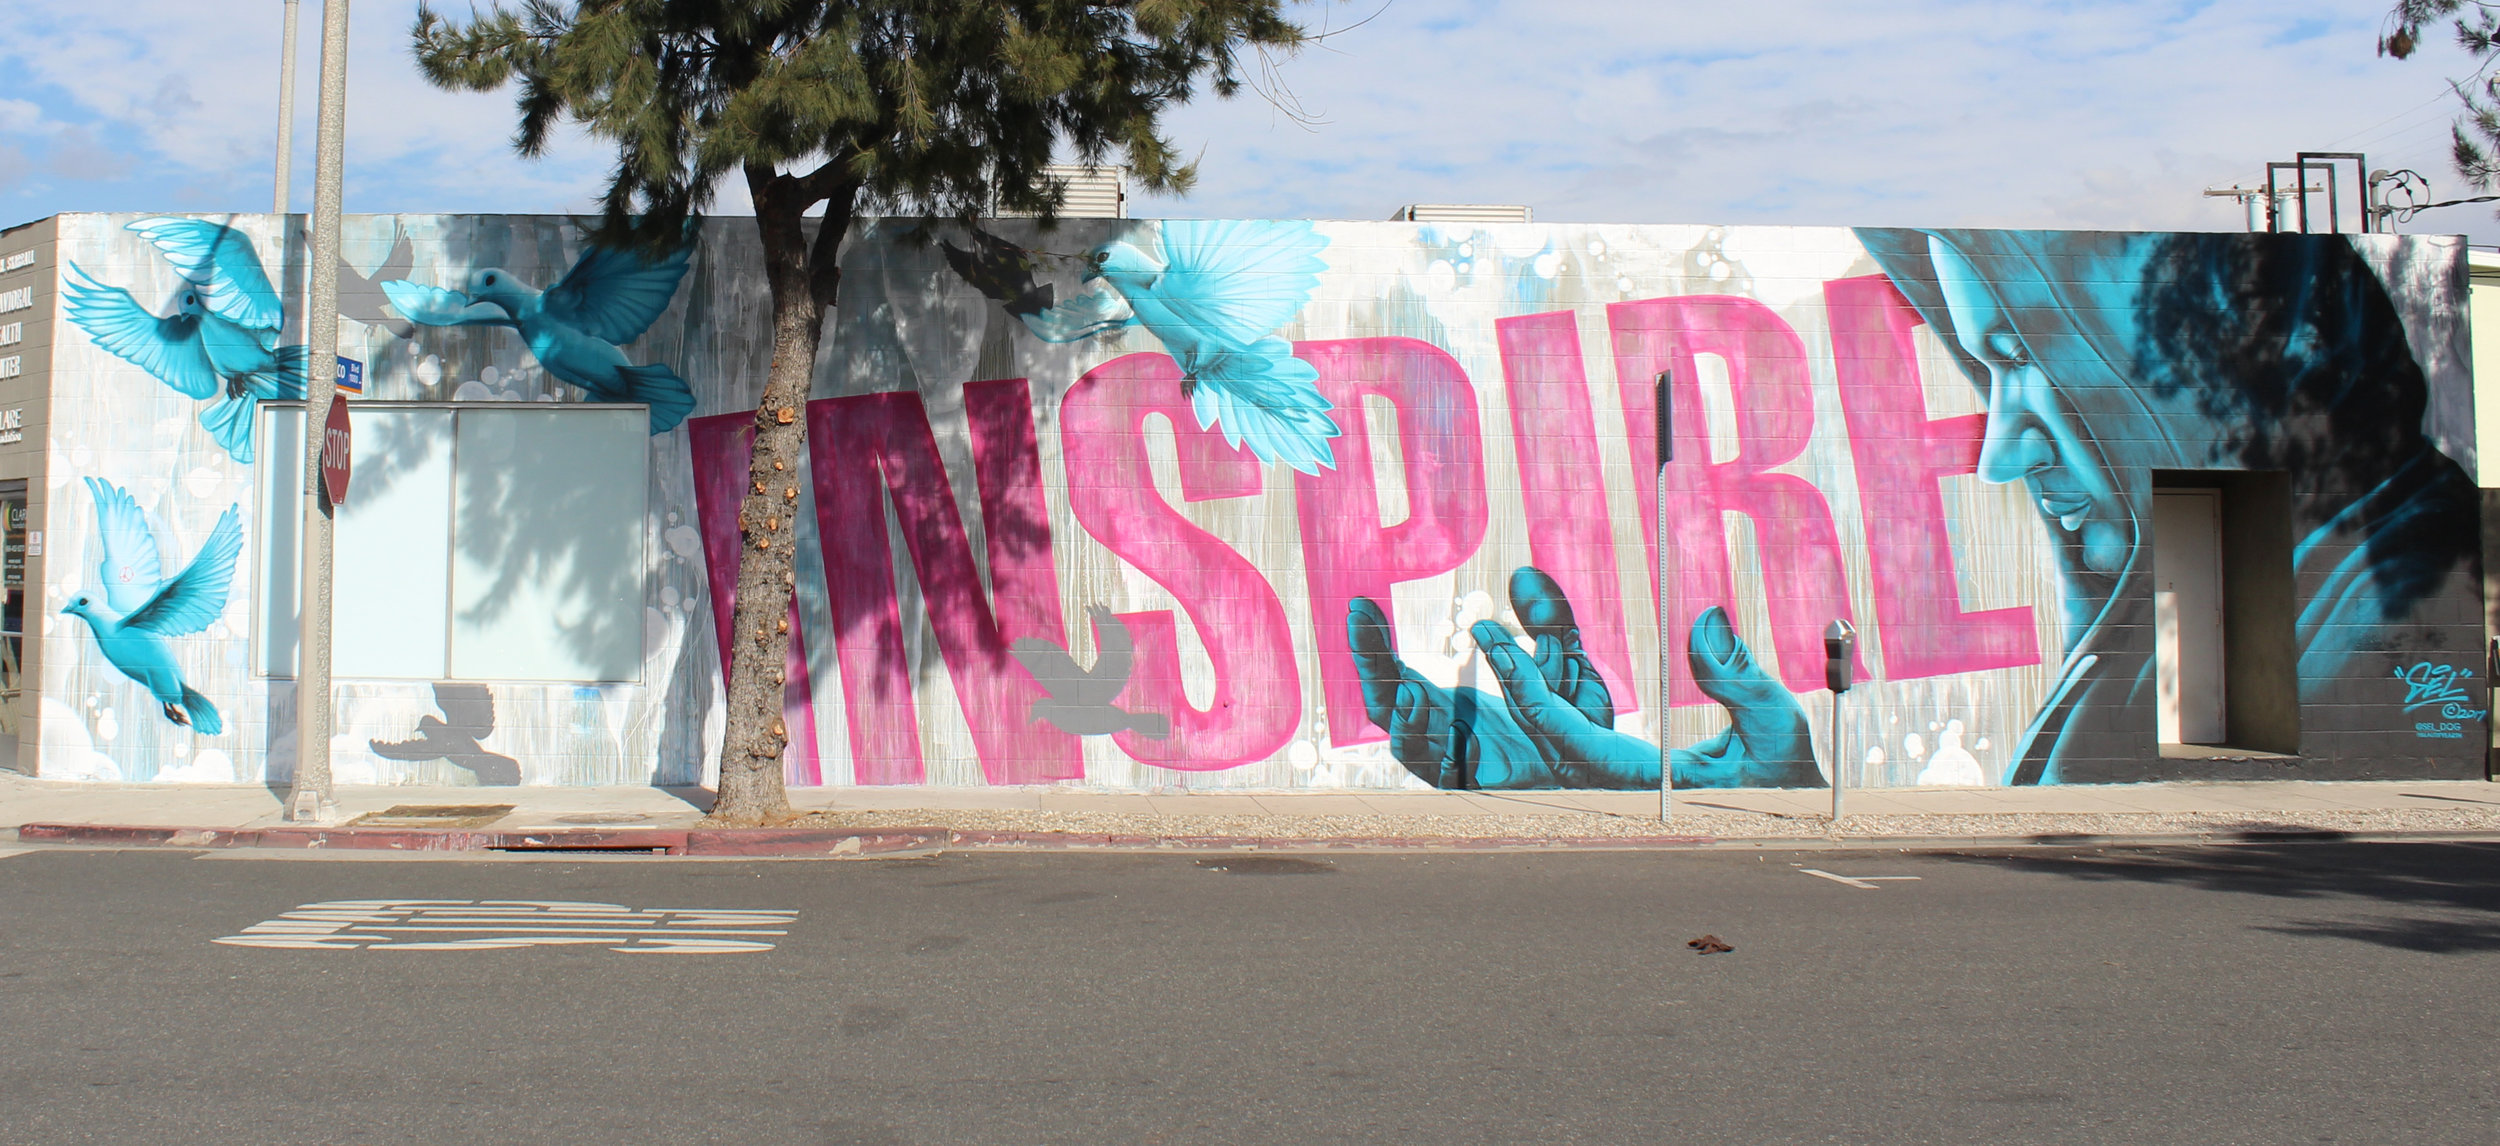  Murals on Pico Blvd show their vibrance in Santa Monica, Calif. 